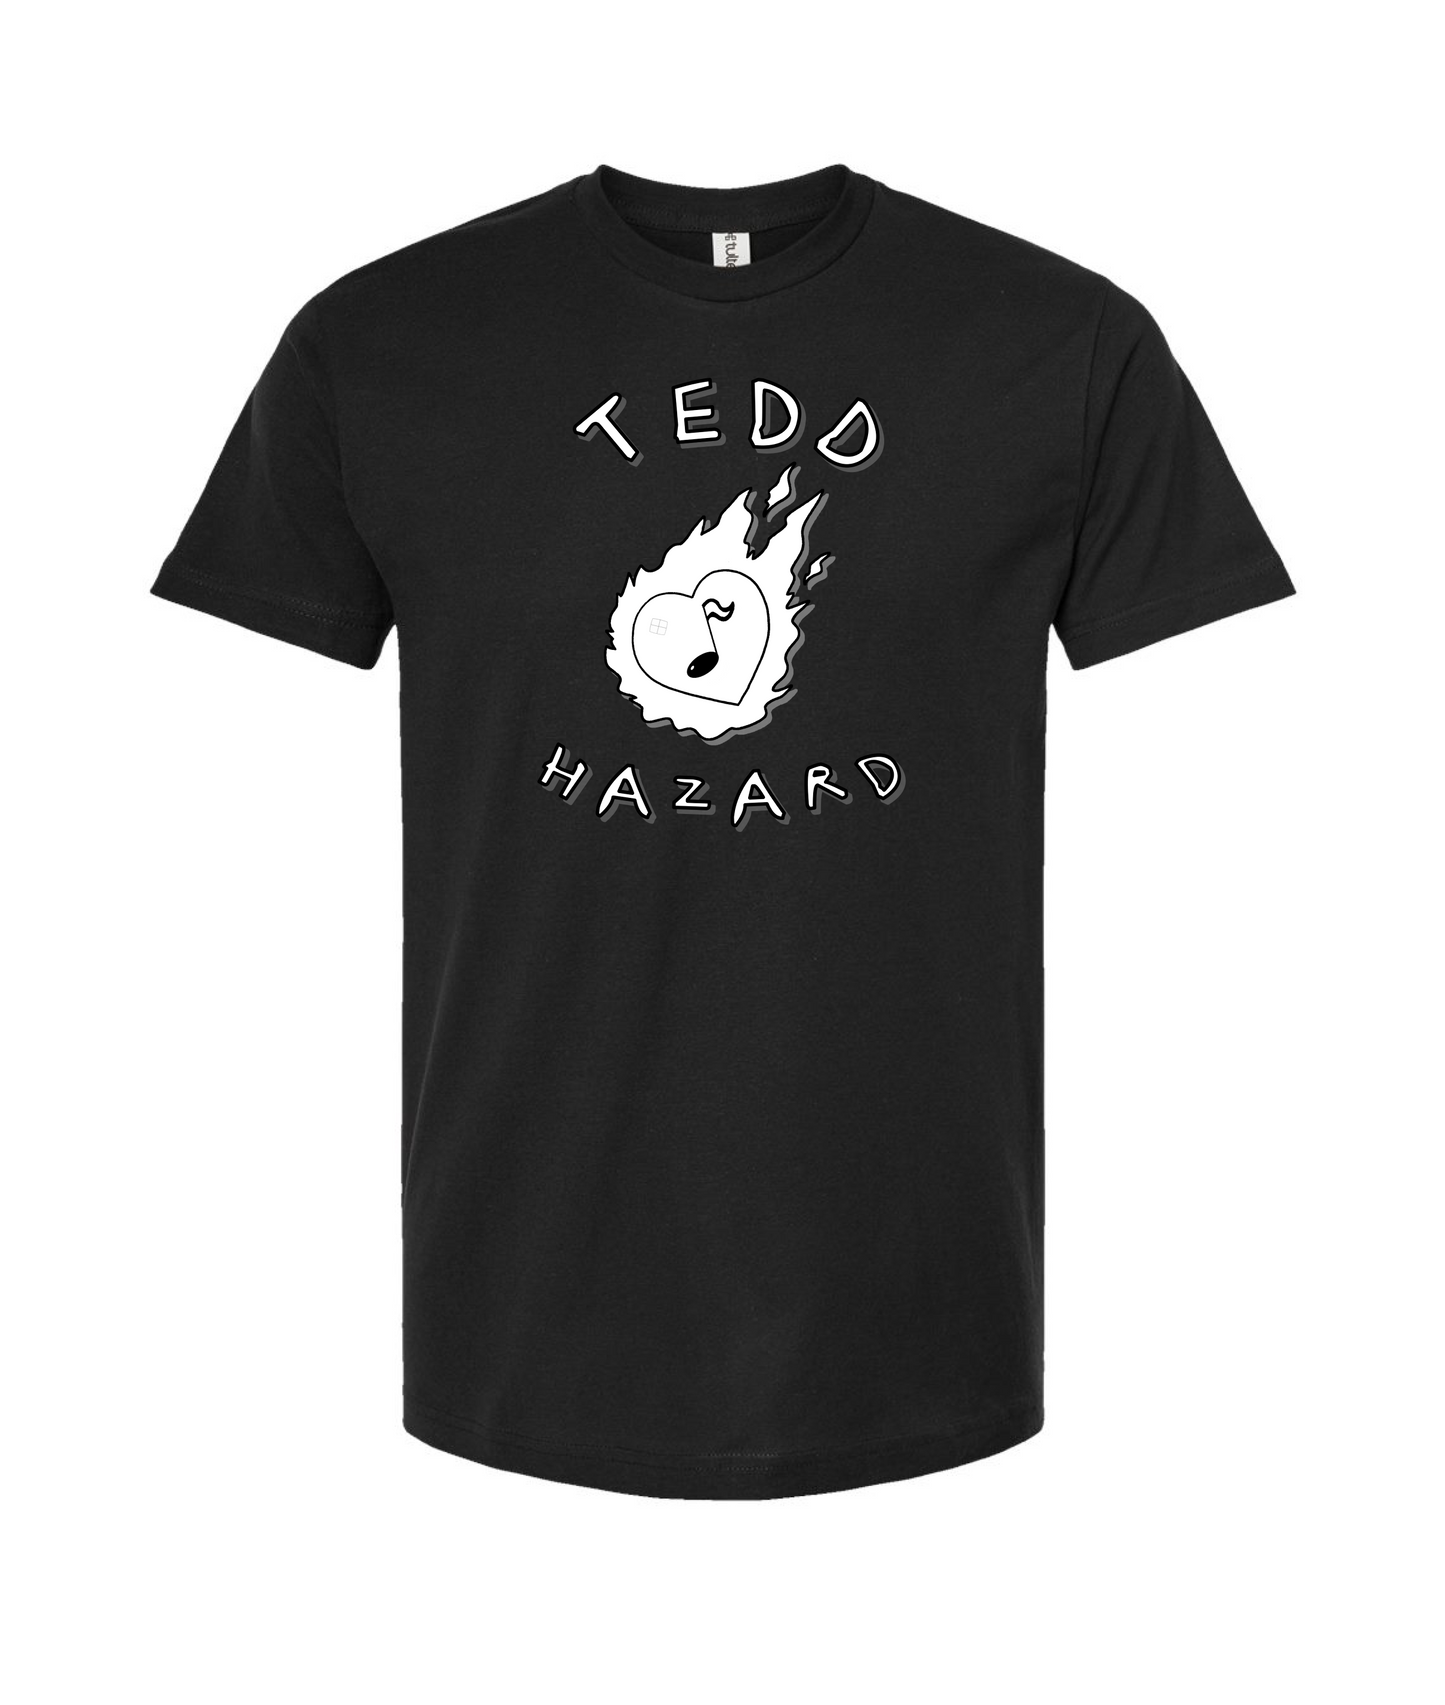 Tedd Hazard - Heart Logo - Black T-Shirt